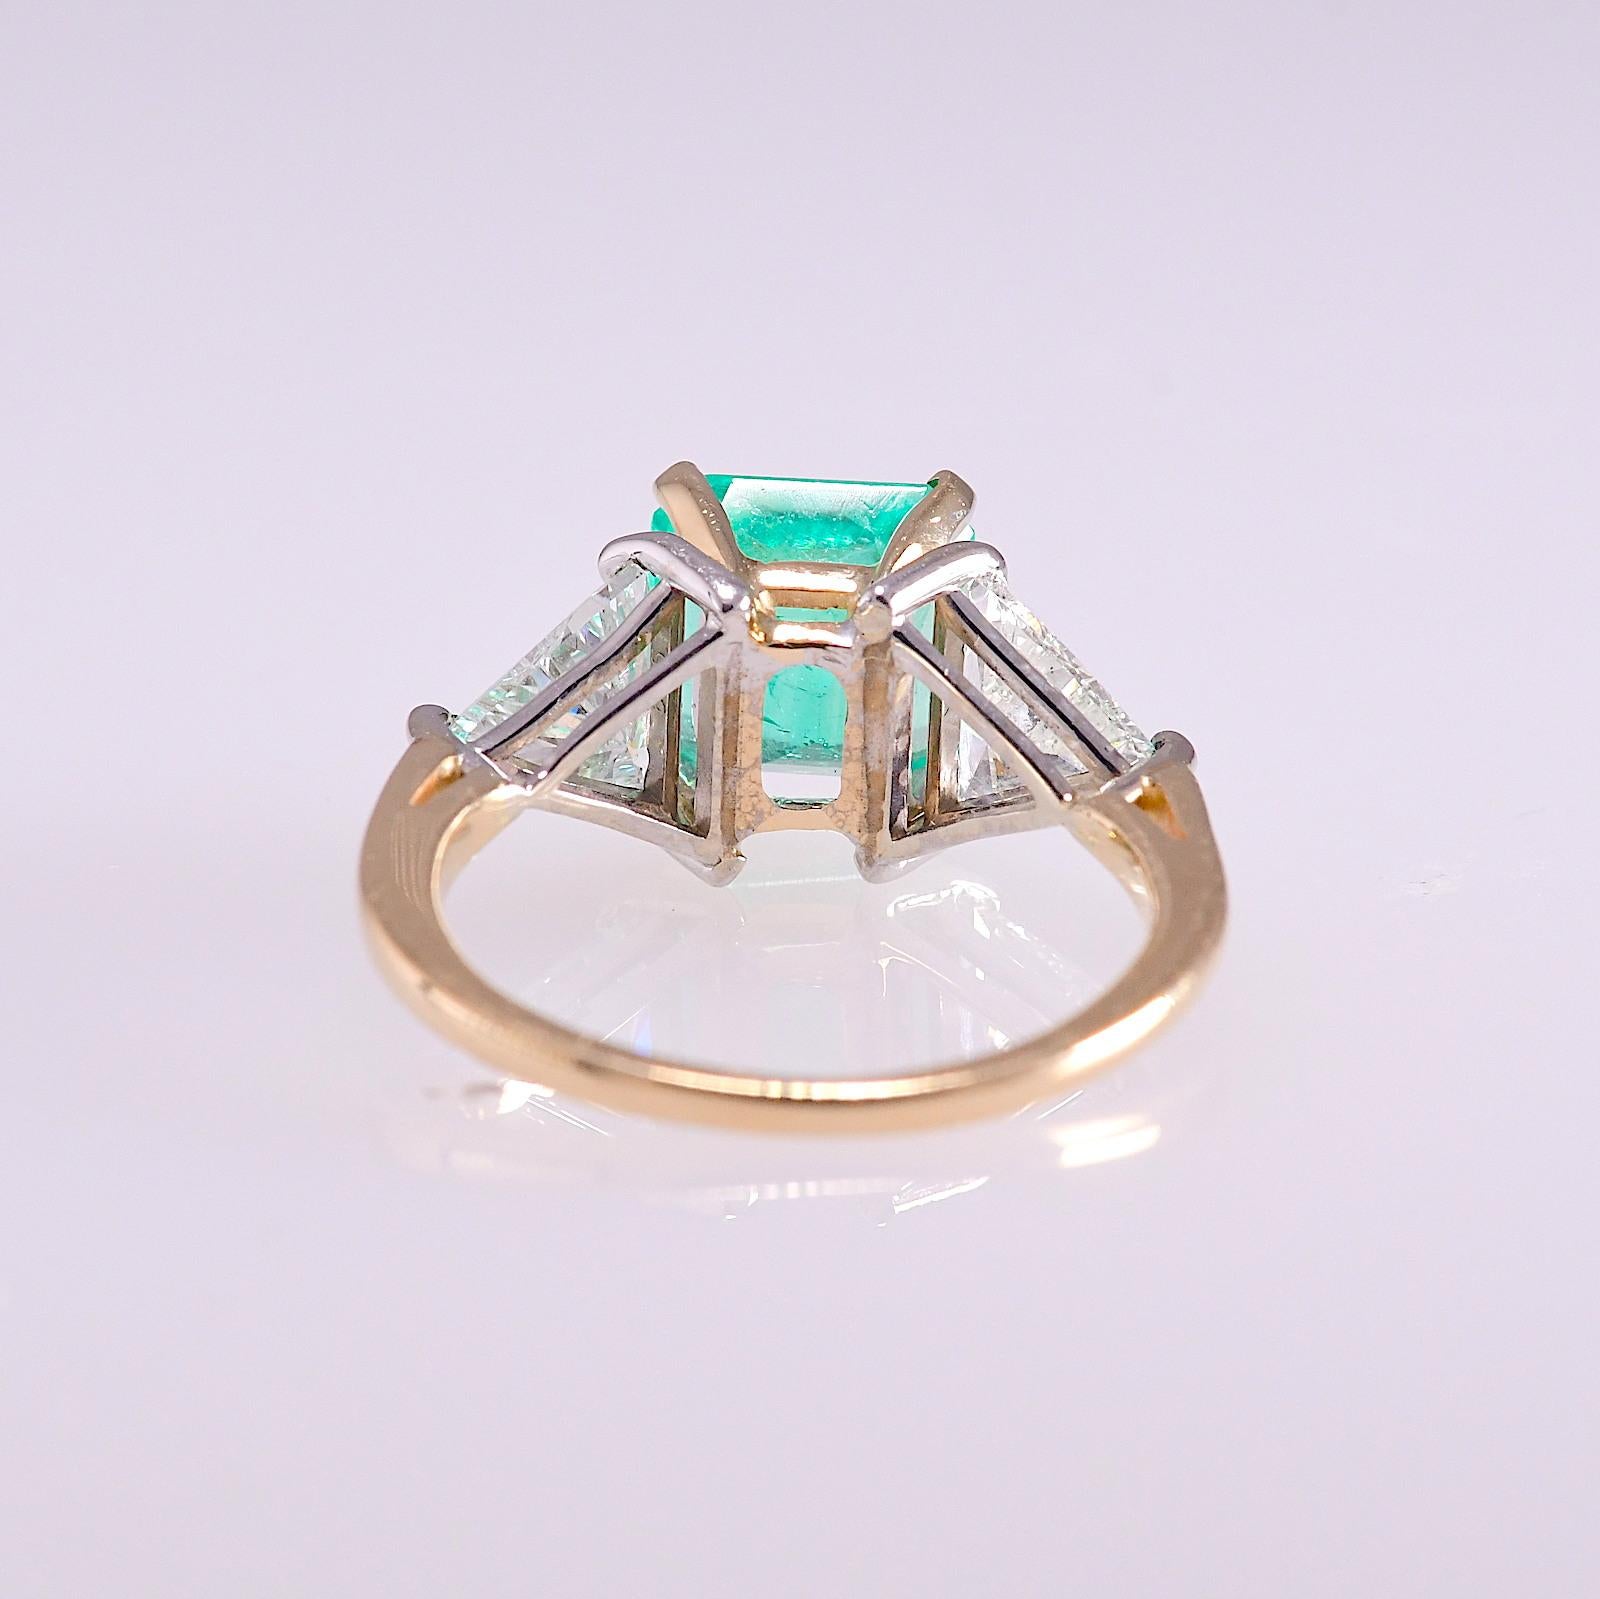 Emerald Cut 2.82 Carat Emerald and 1.4 Carat Diamond Ring 14 Karat Yellow Gold Ring 4.2g